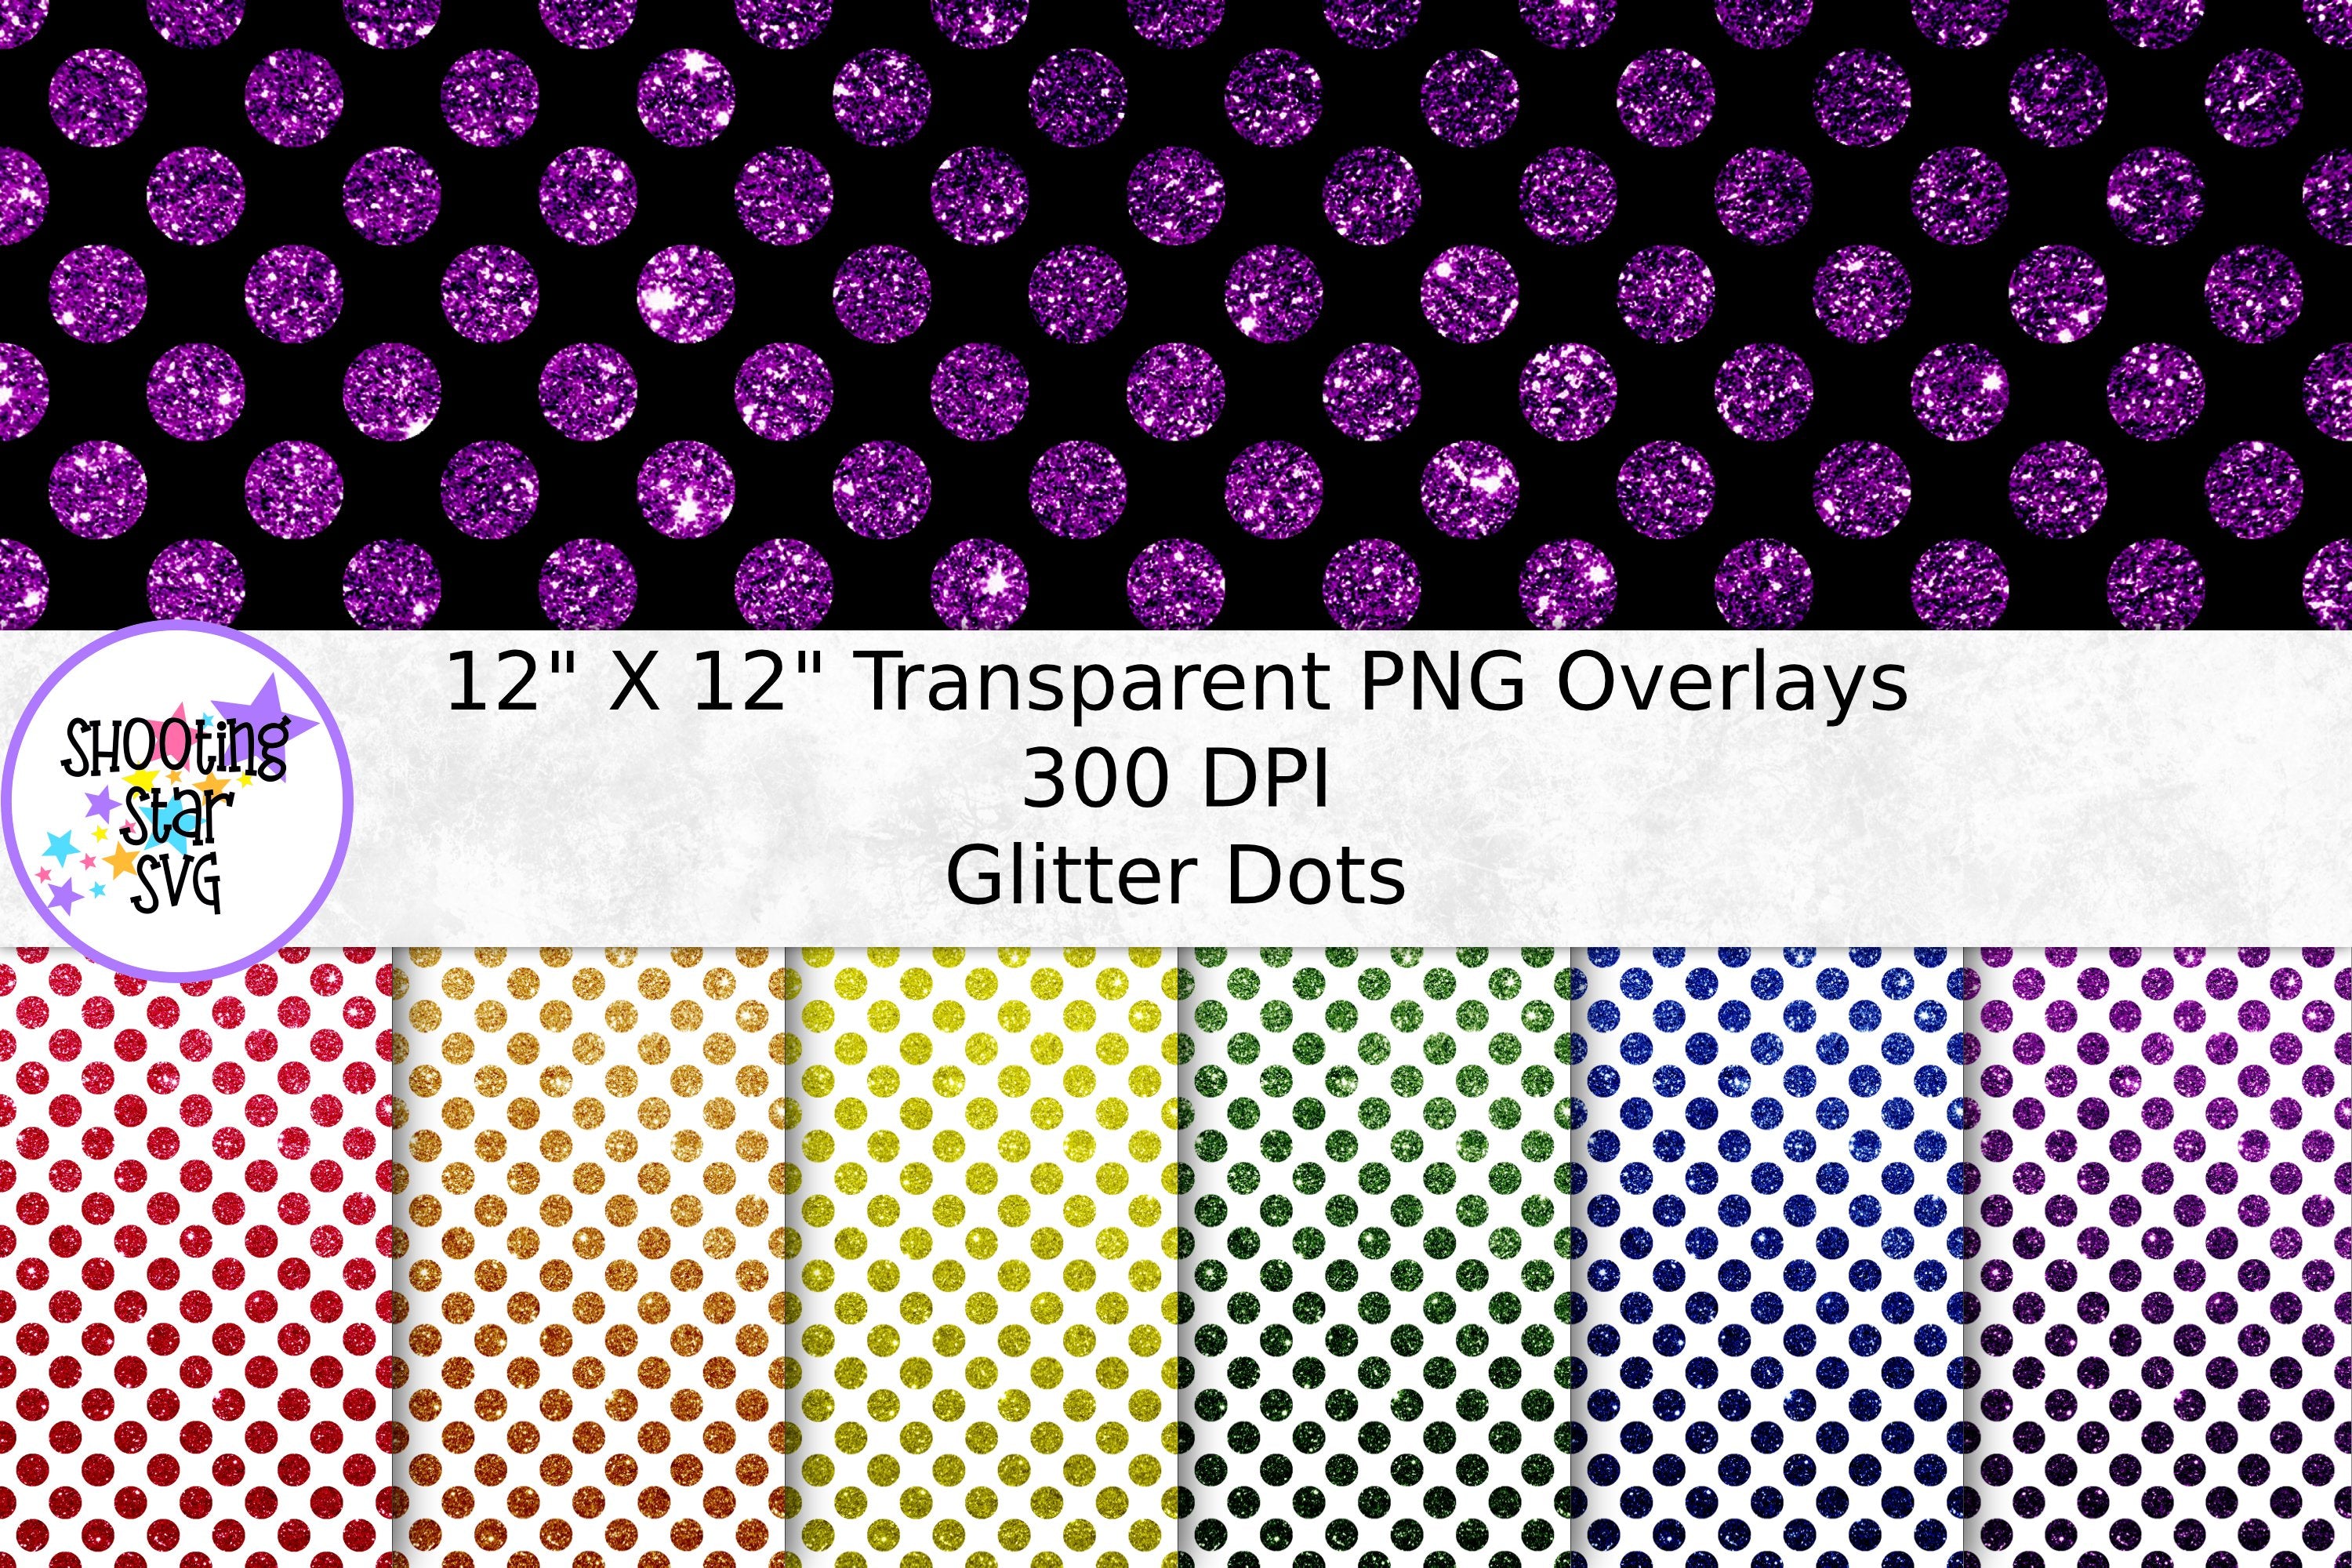 Glitter Dots Transparent Paper Overlay - Seamless